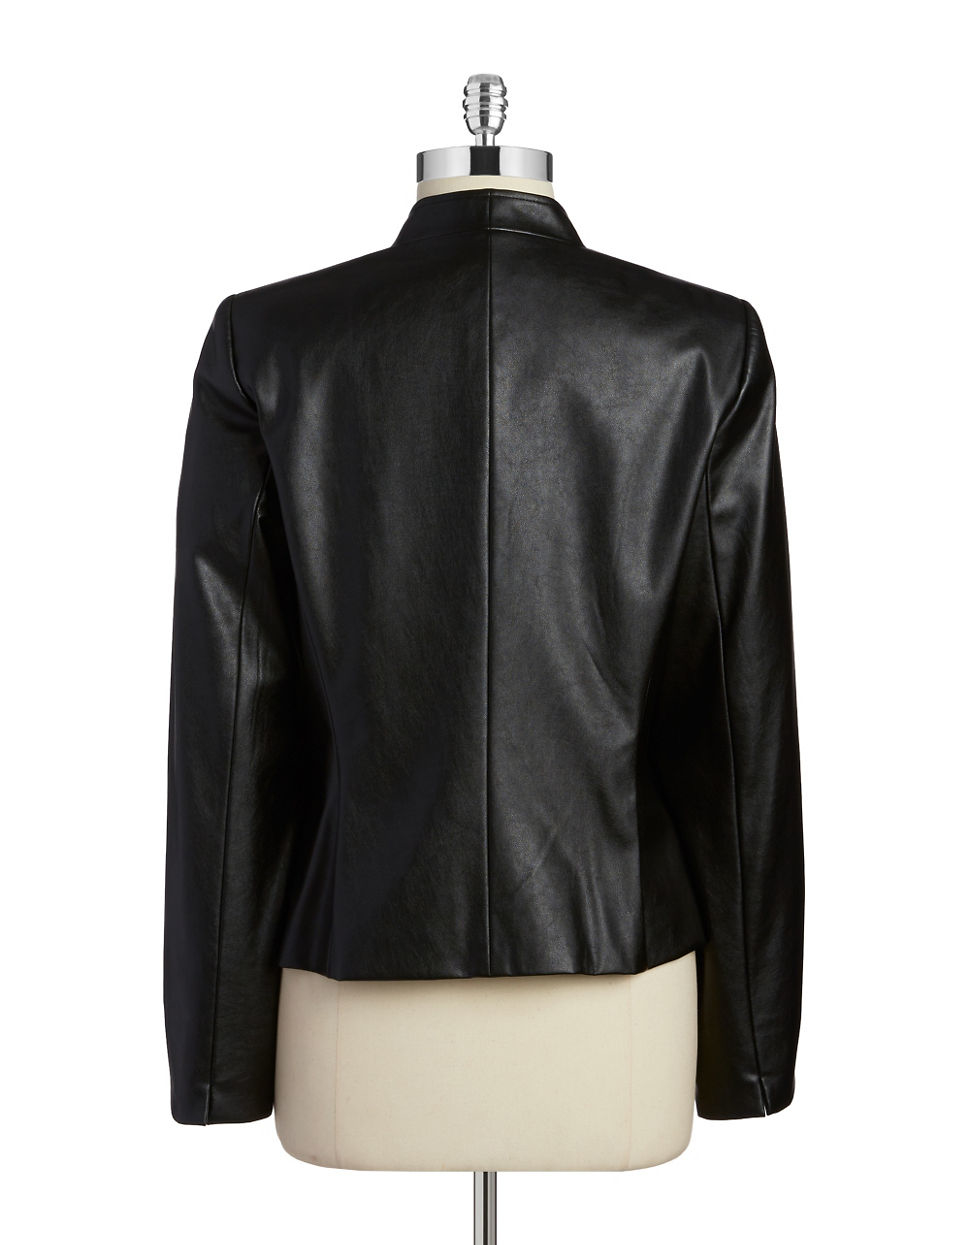 Lyst - Tahari Faux Leather Jacket in Black